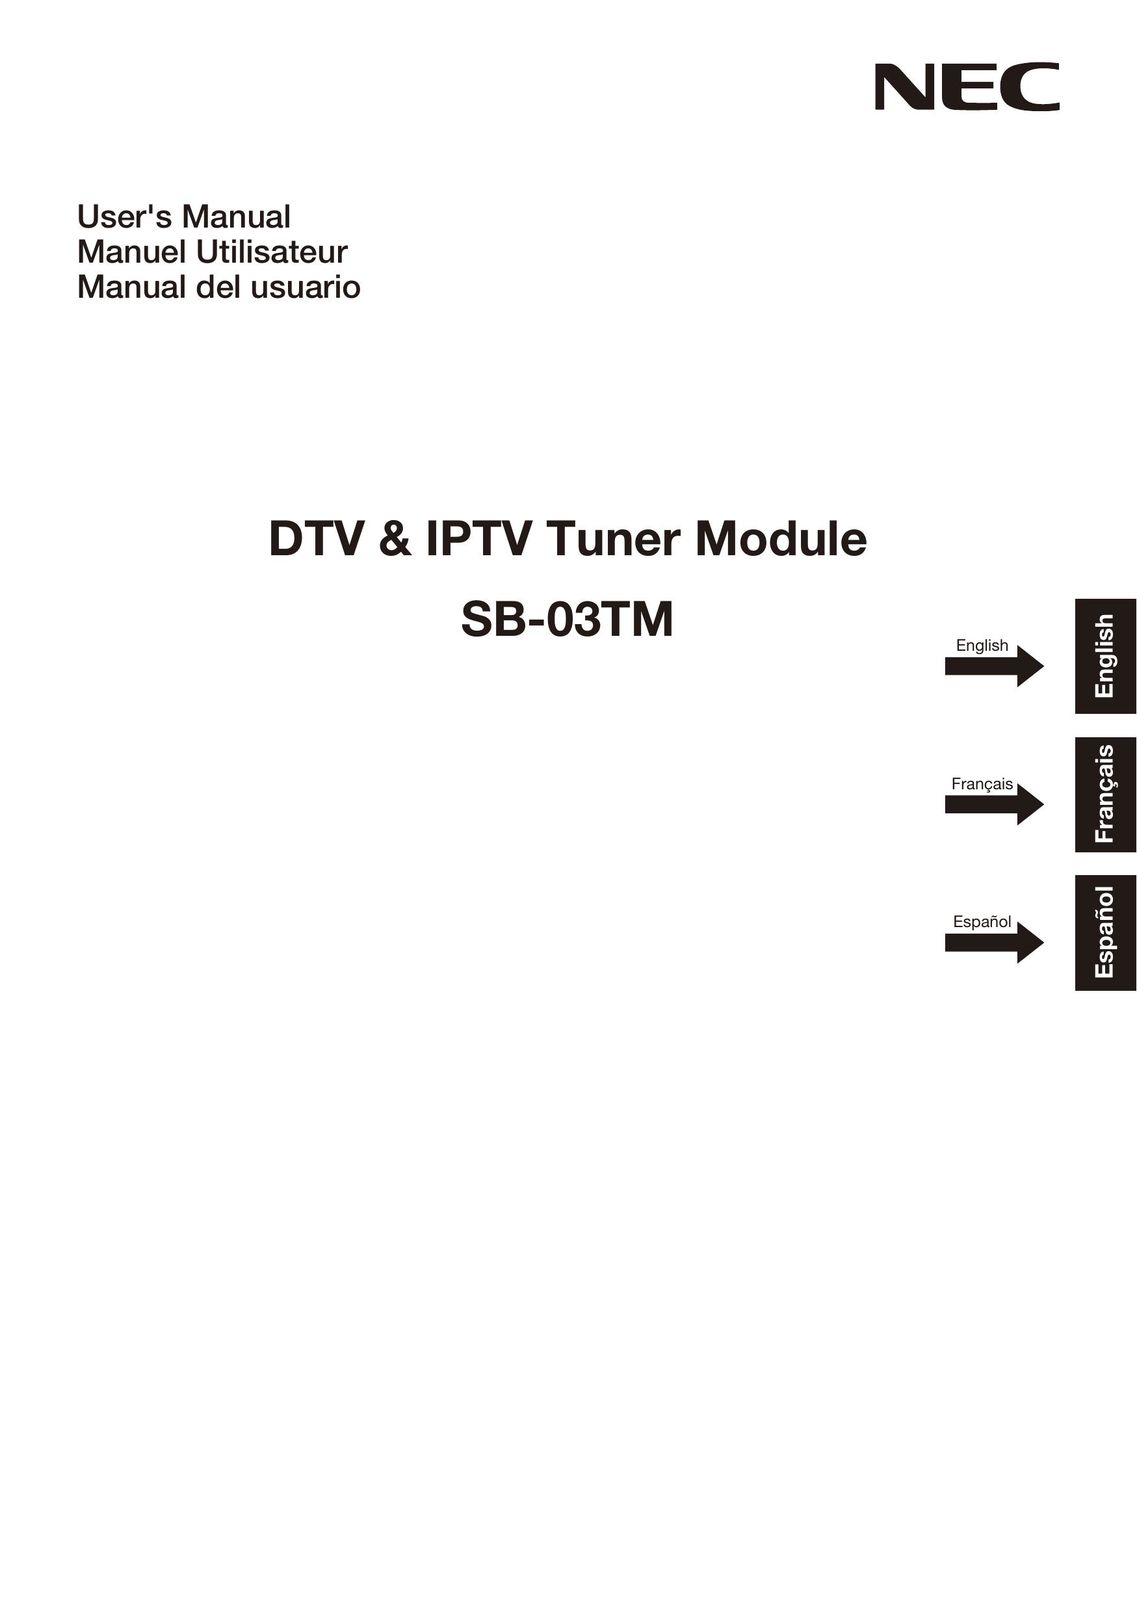 NEC SB-03TM TV Converter Box User Manual